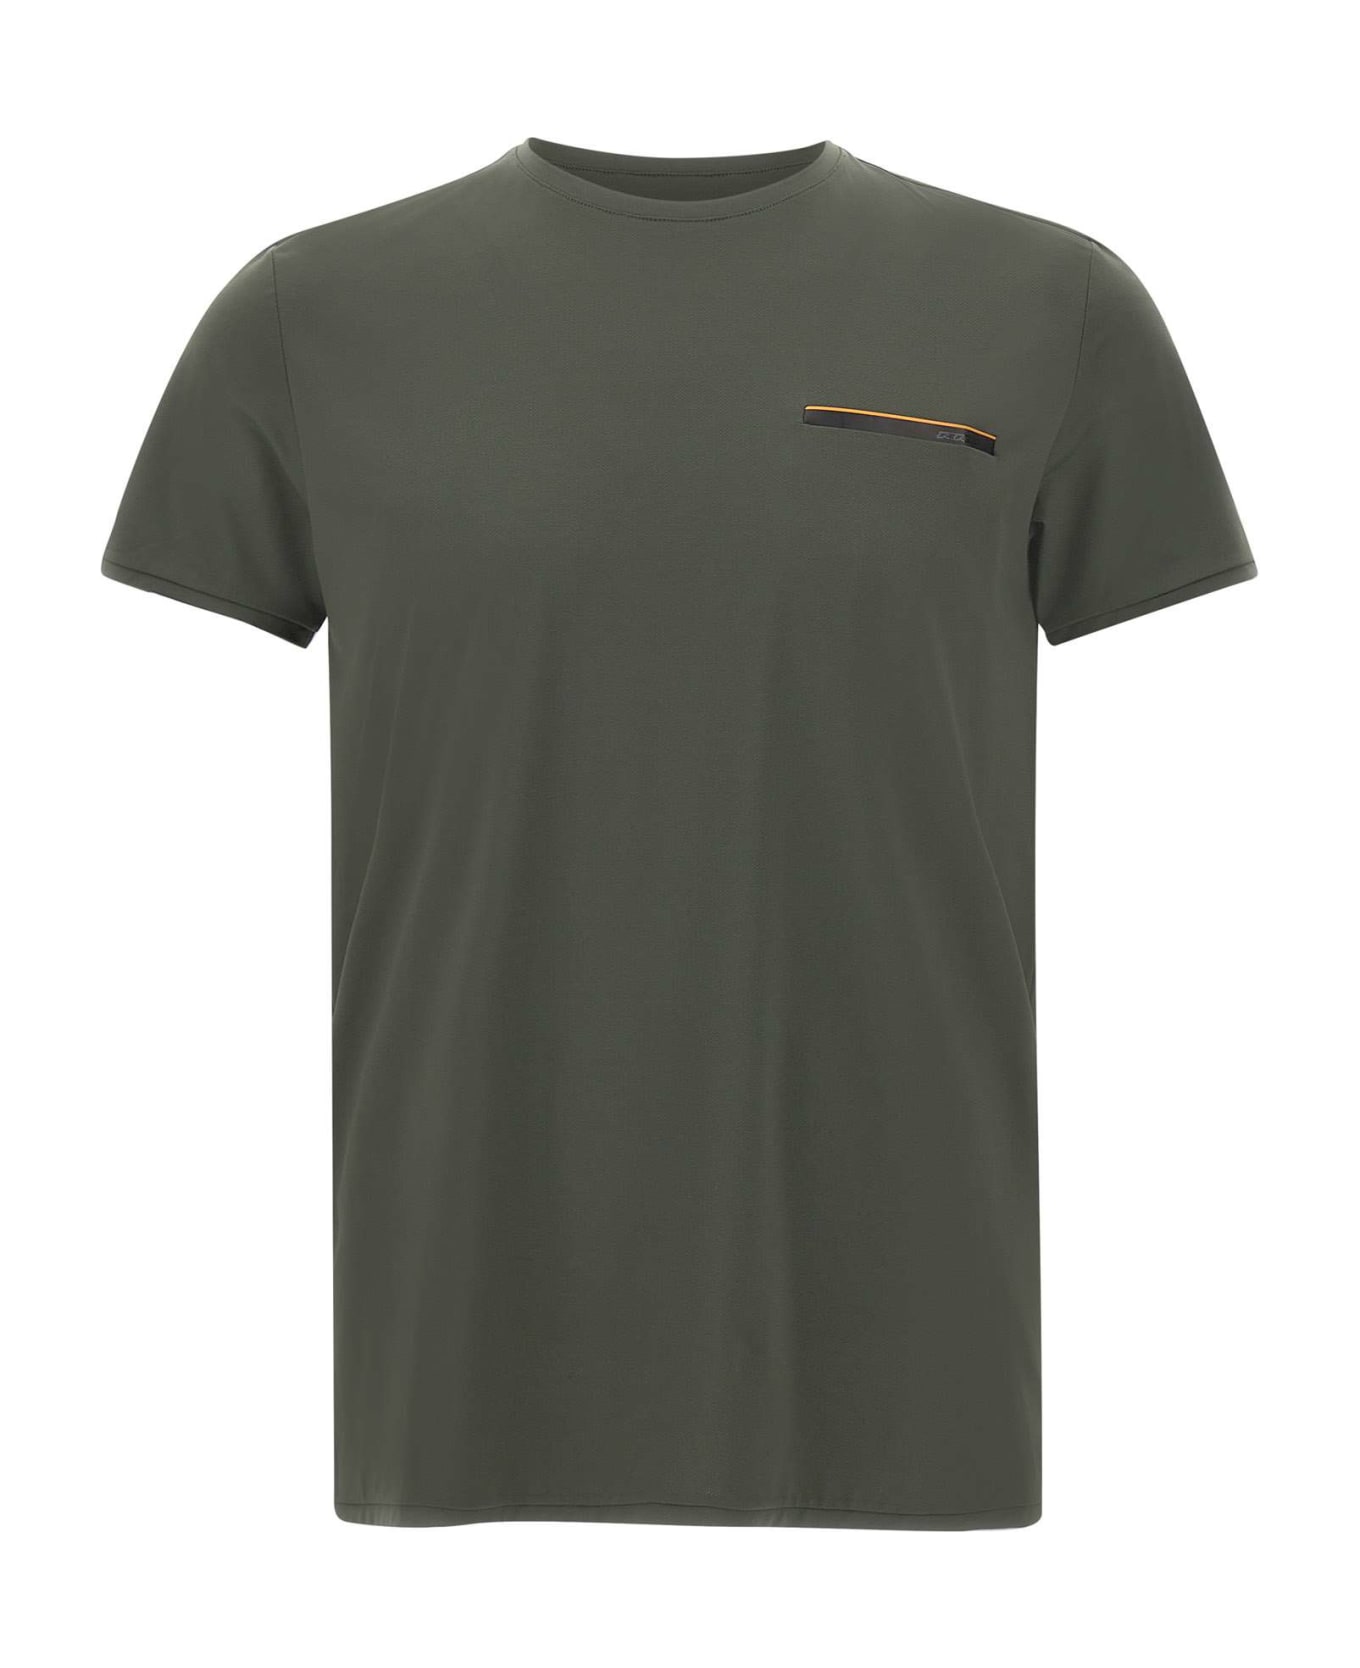 RRD - Roberto Ricci Design "oxford Pocket Shirty" T-shirt - GREEN シャツ